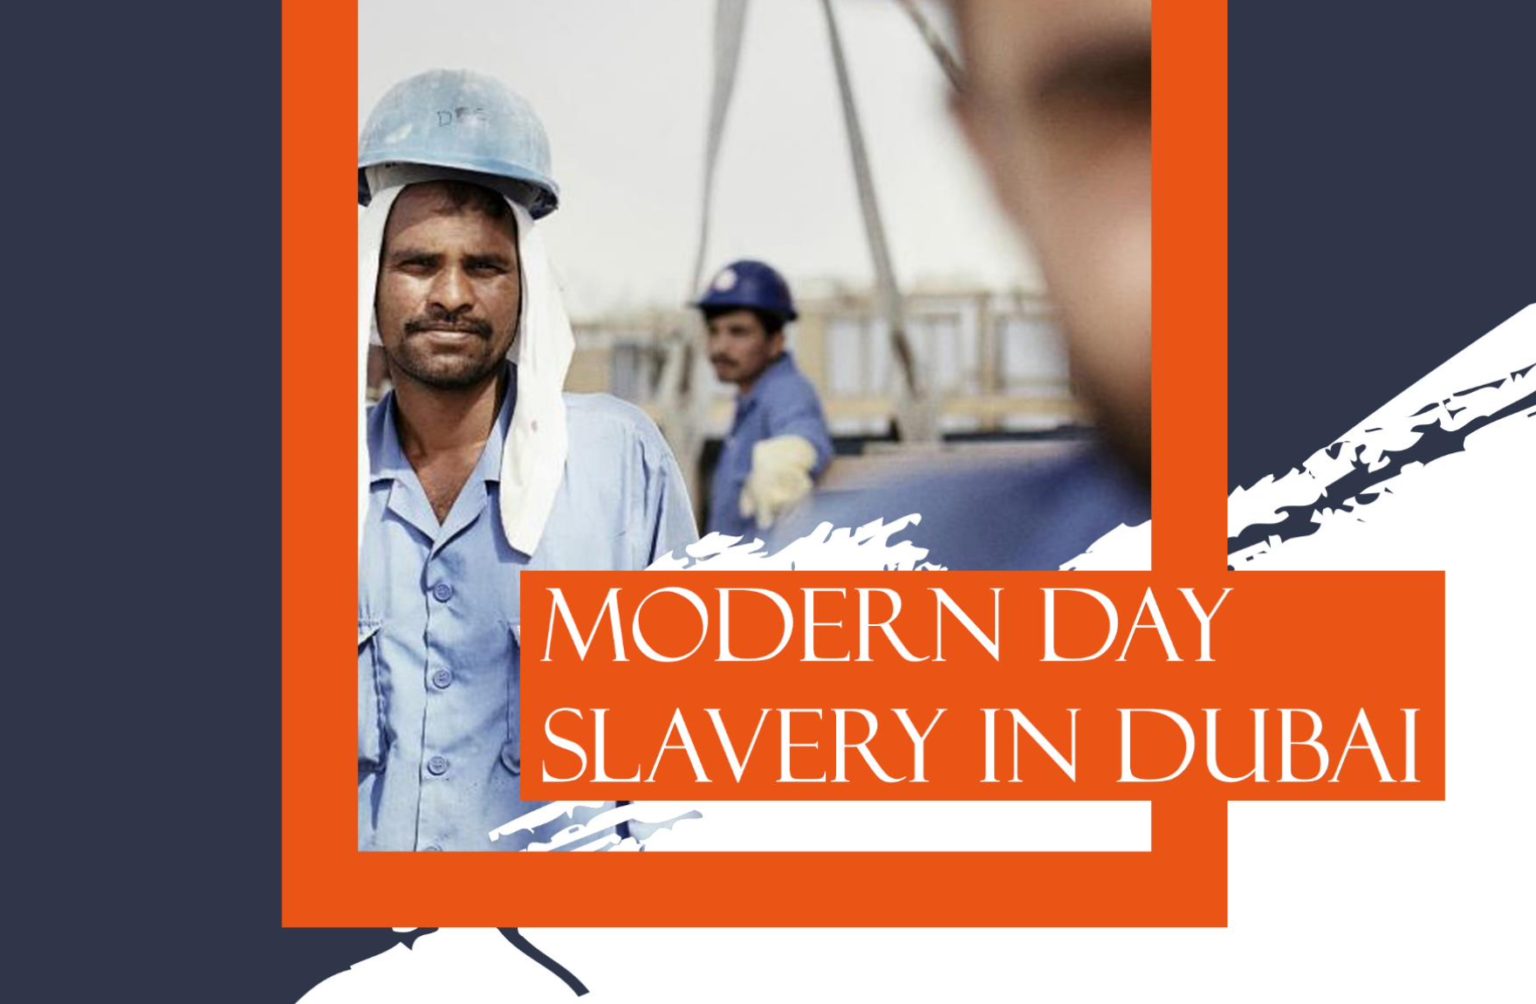 Report: Modern Day Slavery in Dubai